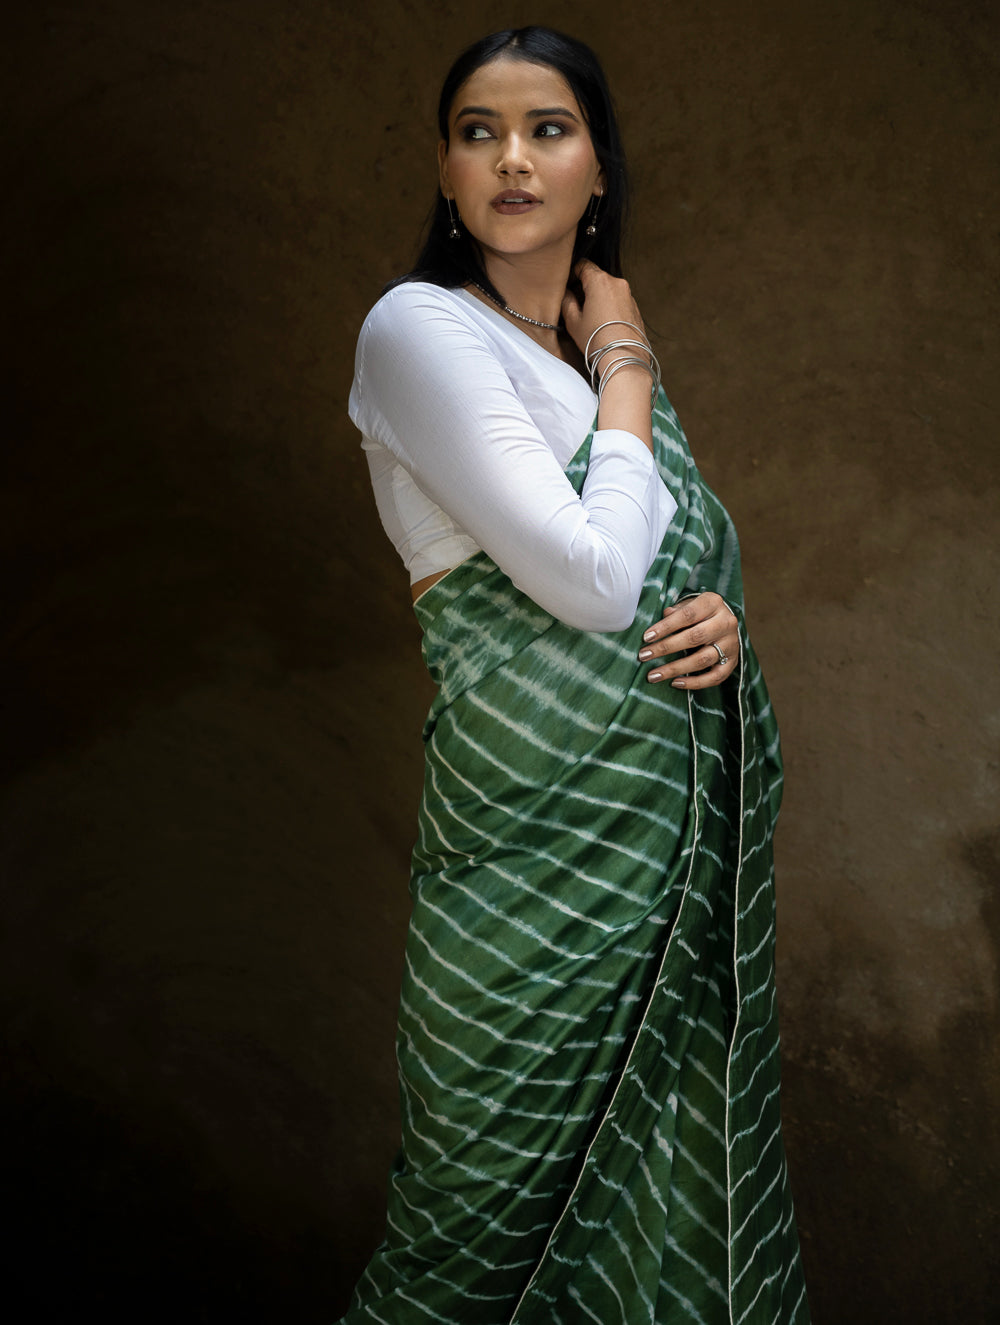 Load image into Gallery viewer, Striped Elegance. Hand Dyed Lehariya Chanderi Saree - Deep Green &amp; Beige